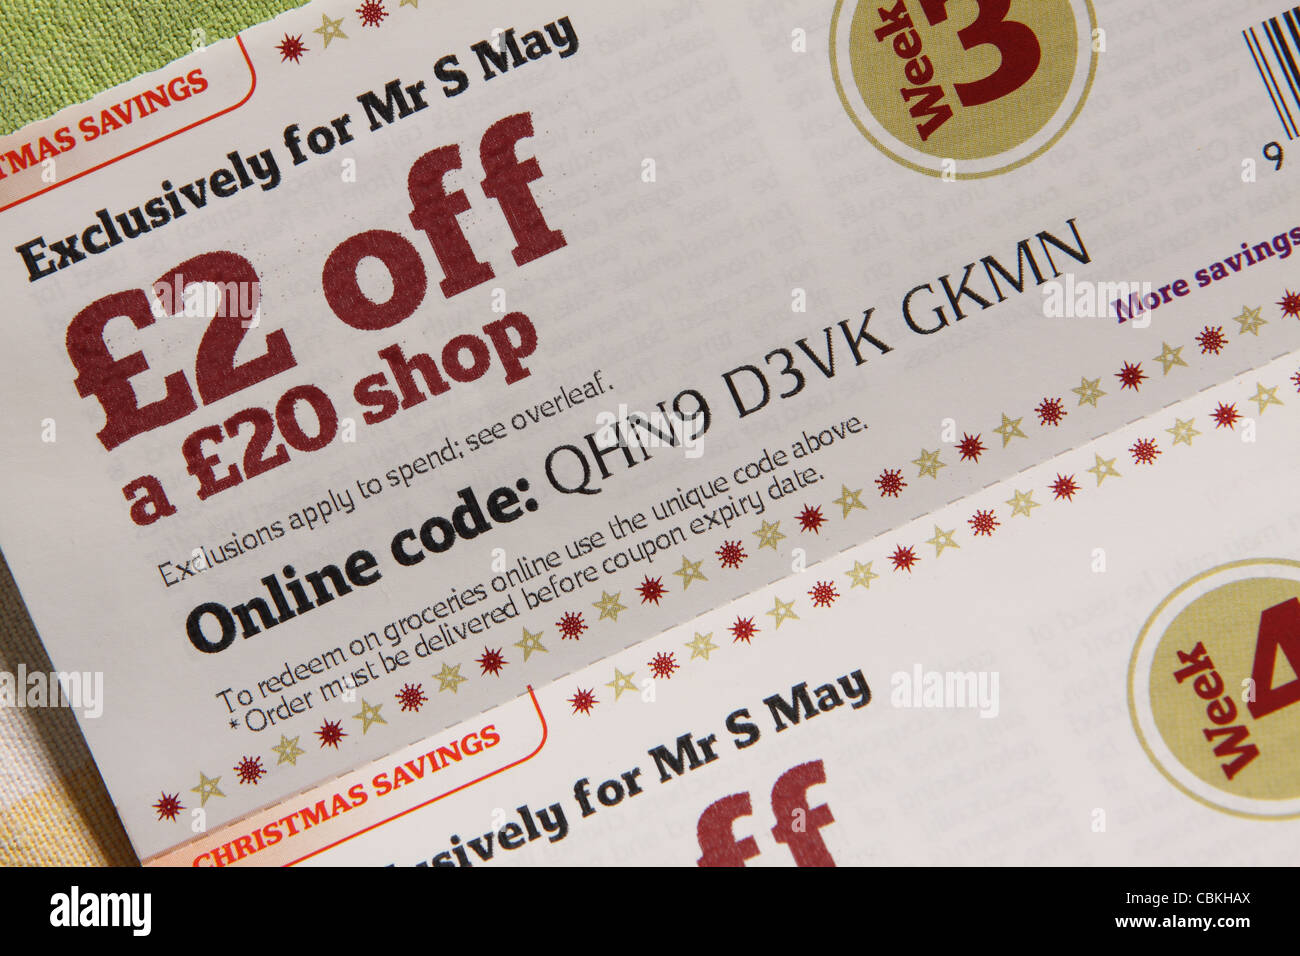 Supermarket money off loyalty voucher coupon £2 off a £20 shop saving Stock Photo